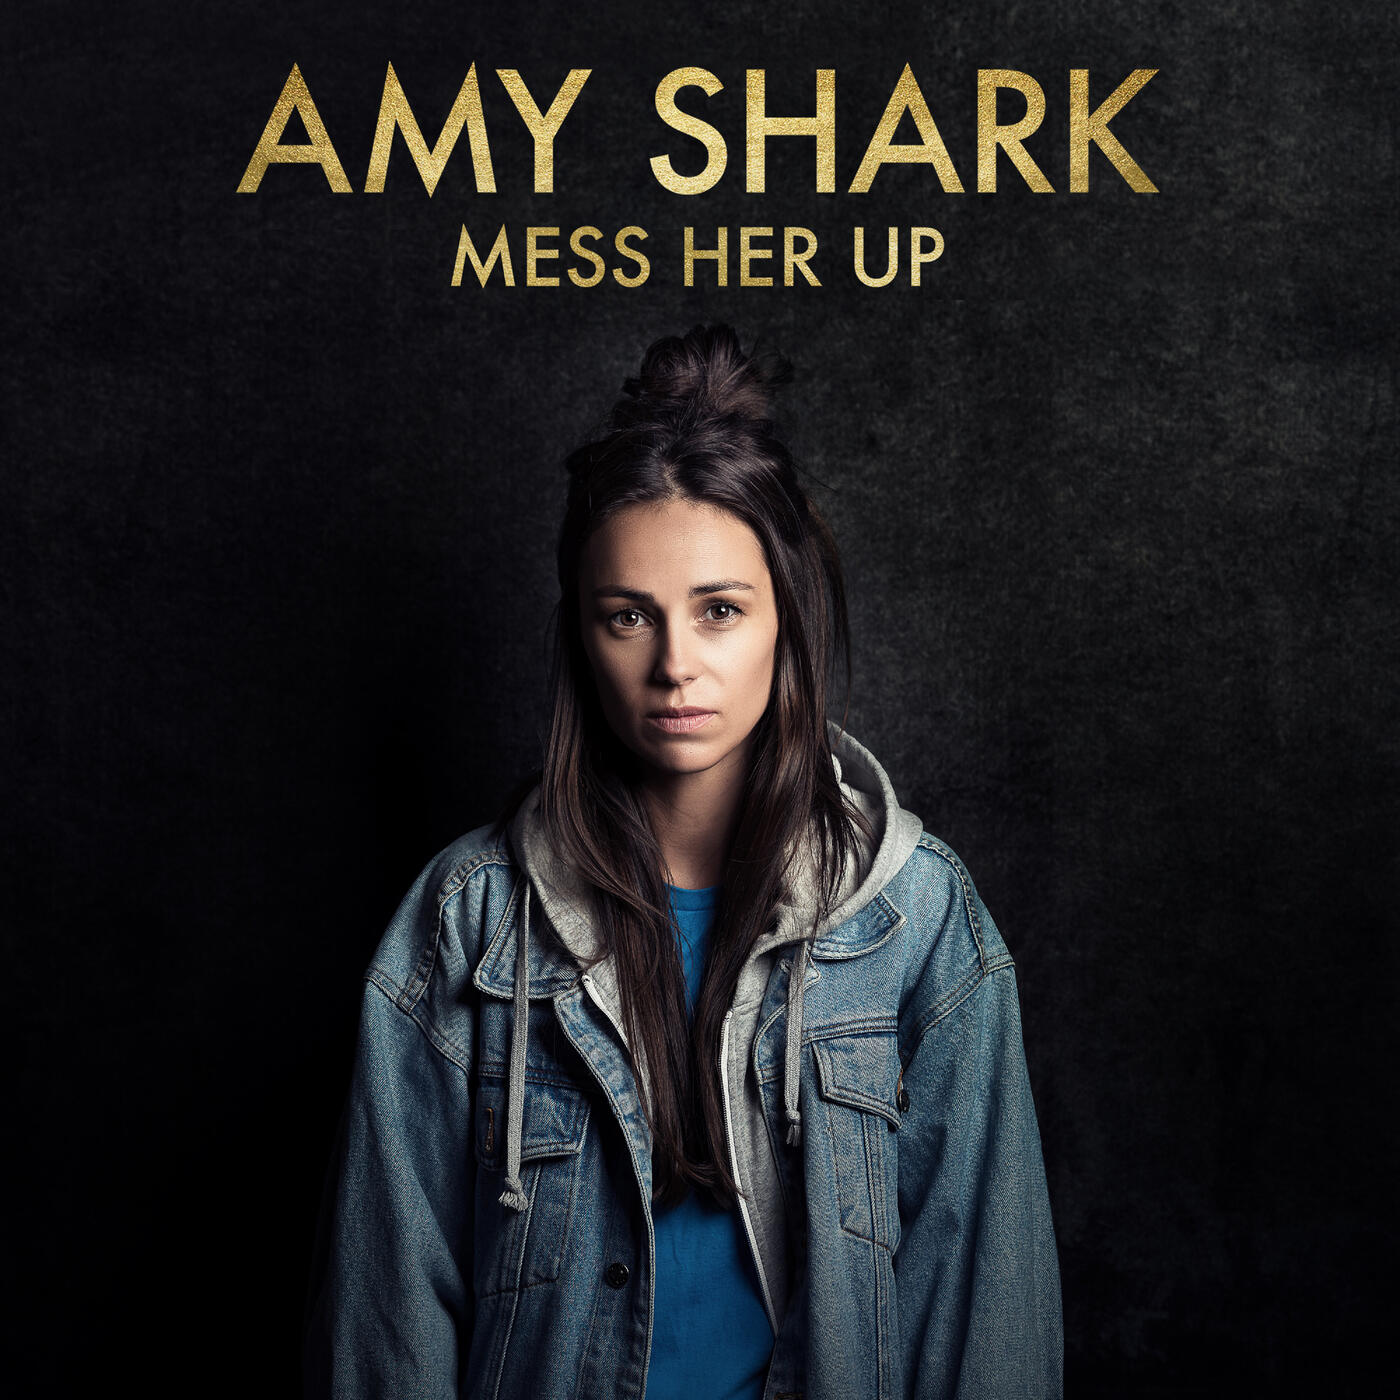 Amy Shark Mess Her Up Iheartradio 